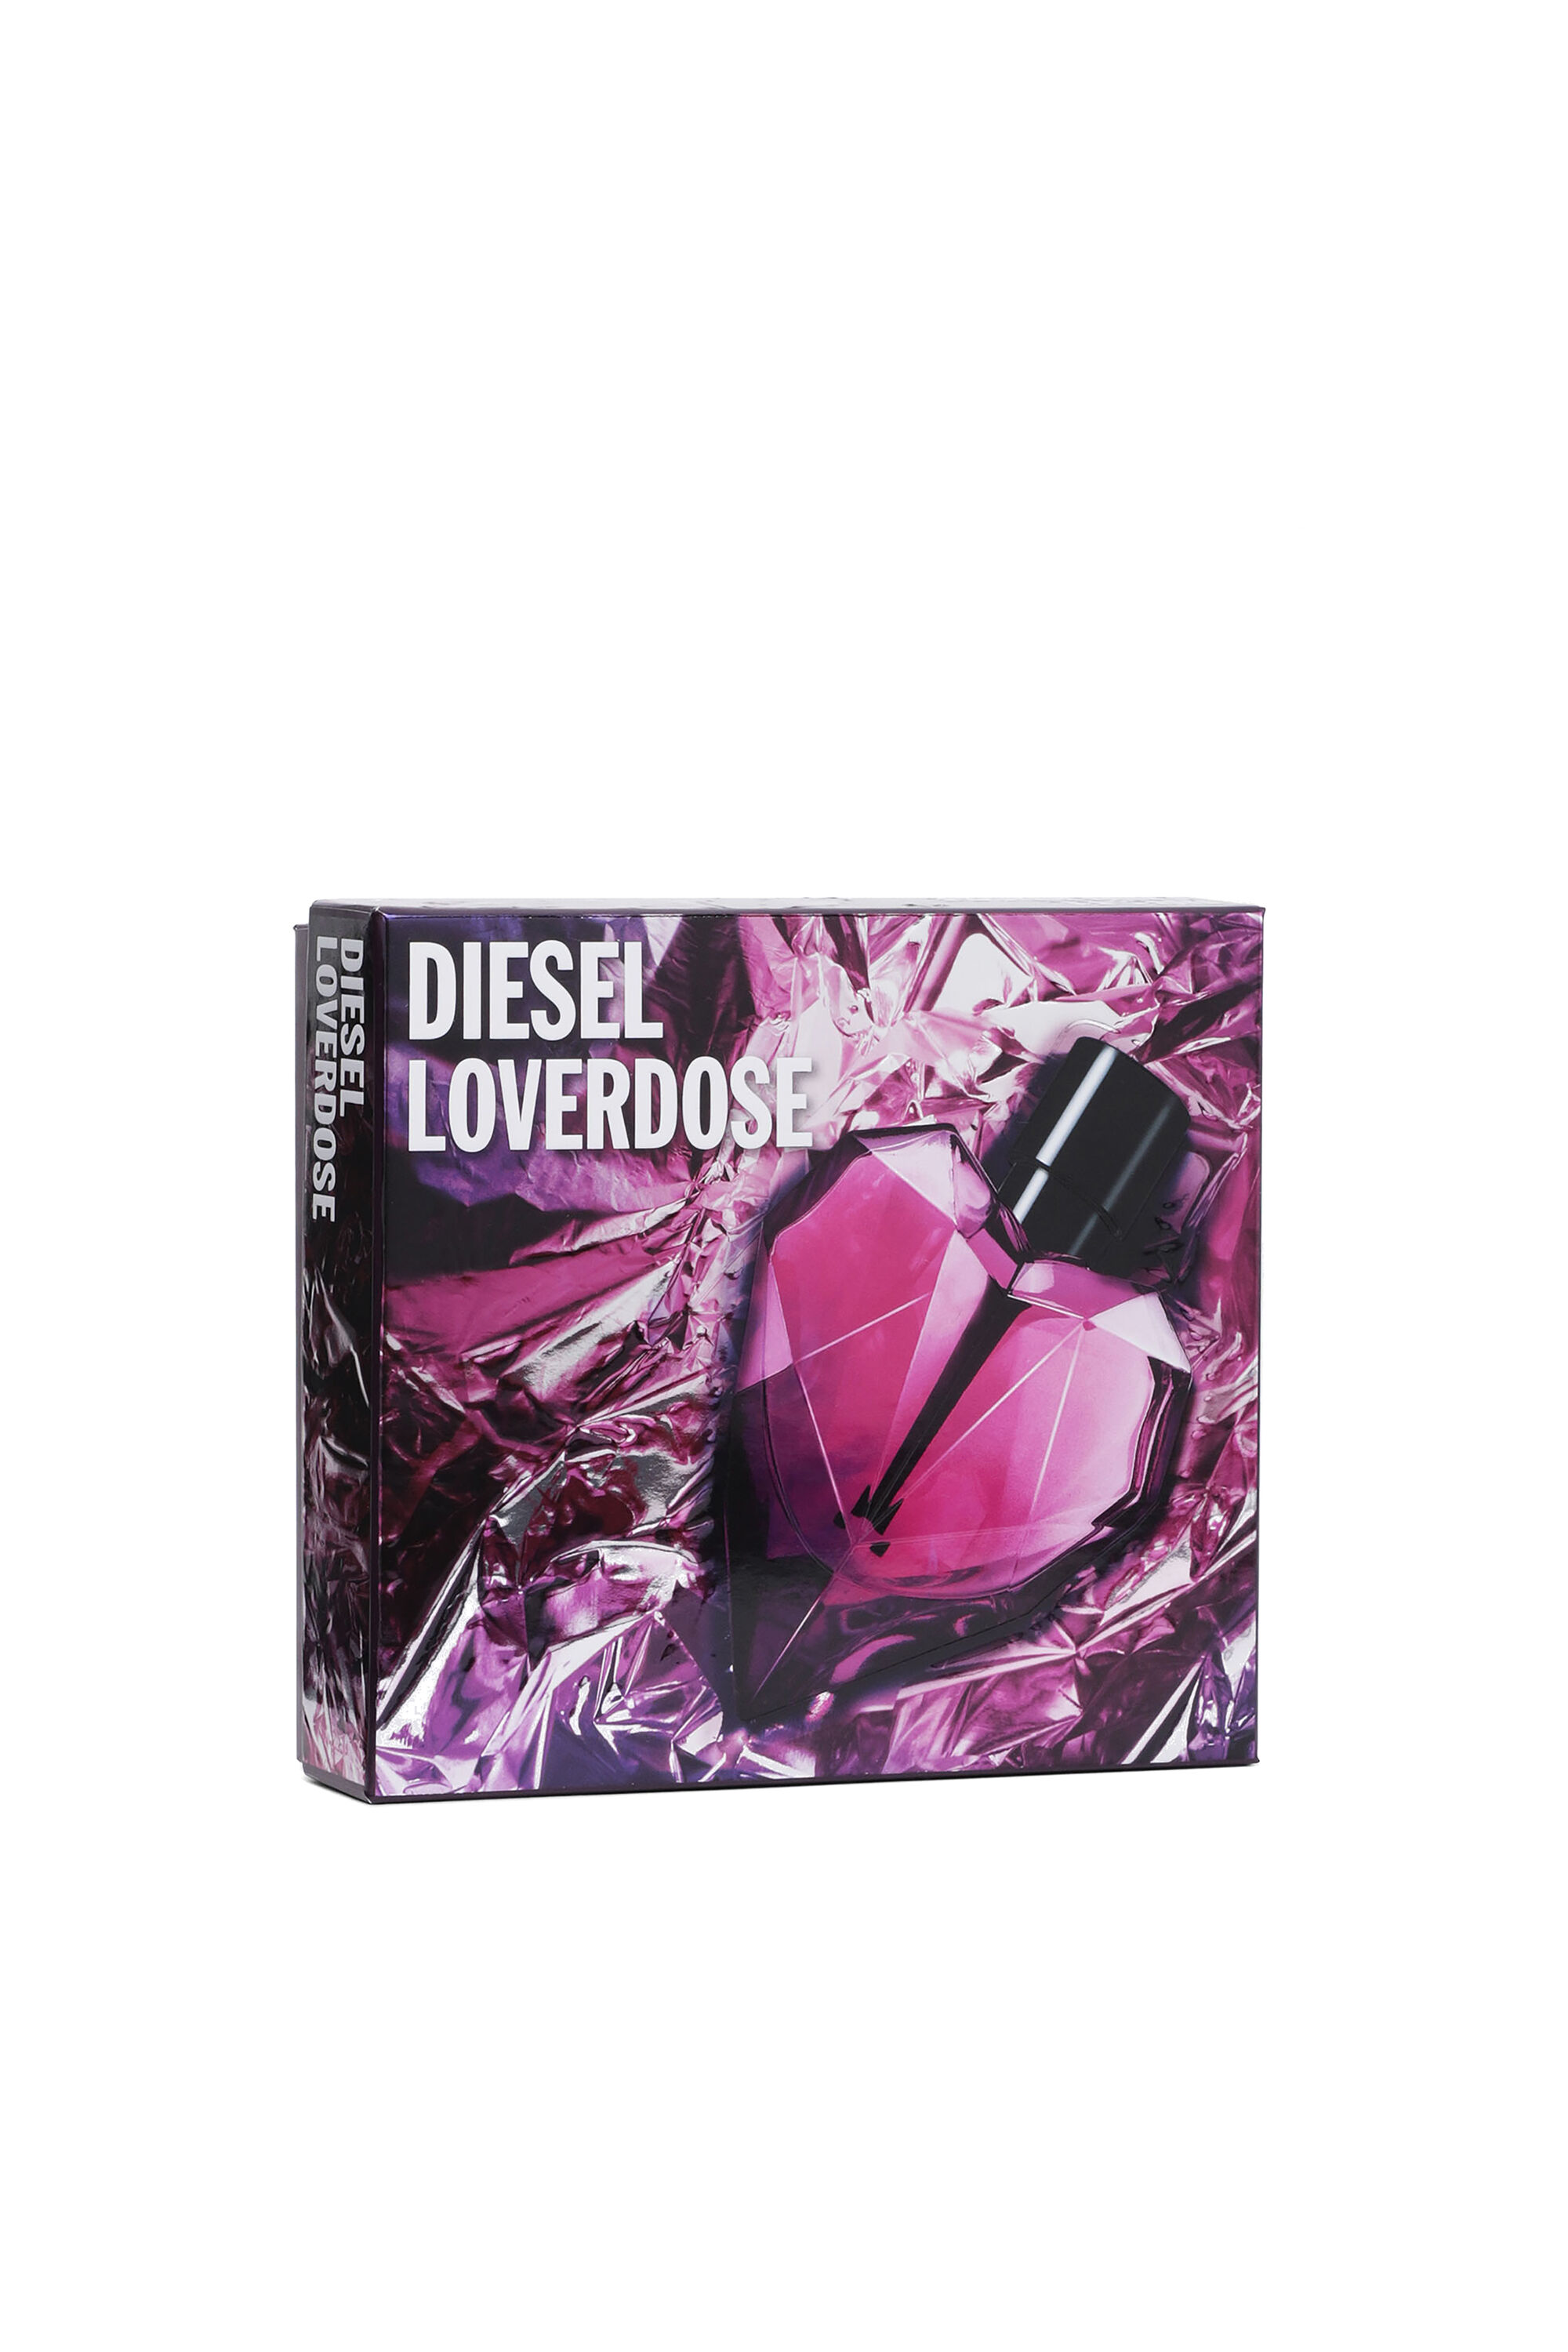 Diesel - LOVERDOSE 30ML GIFT SET, Generico - Image 1